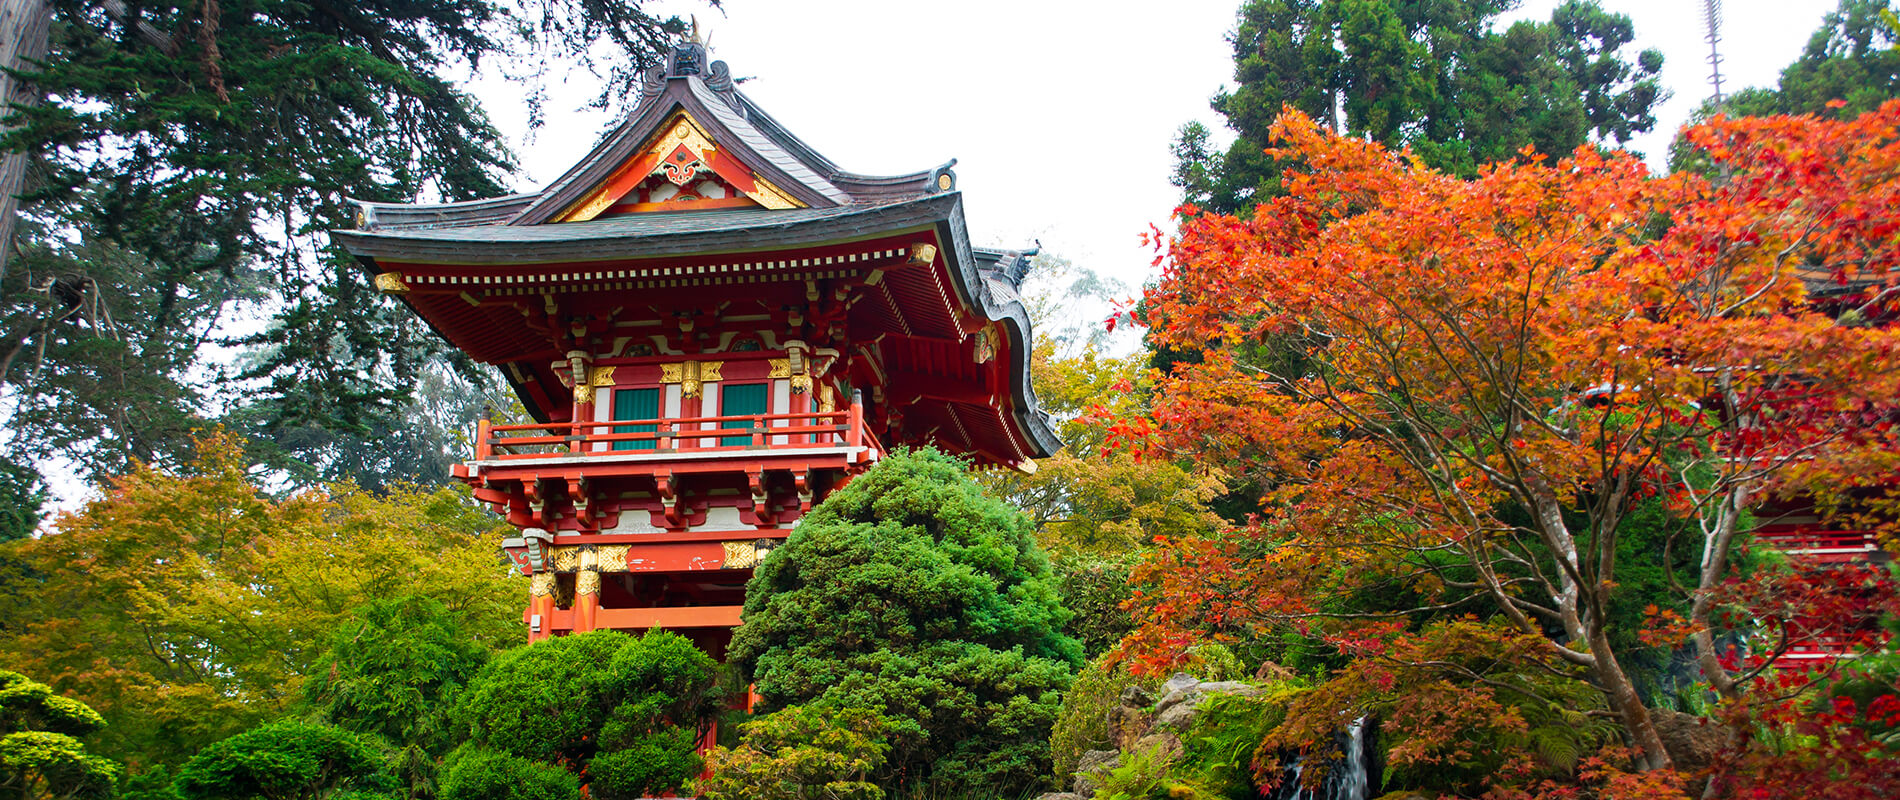 Japanese Tea Garden, il giardino segreto di San Francisco